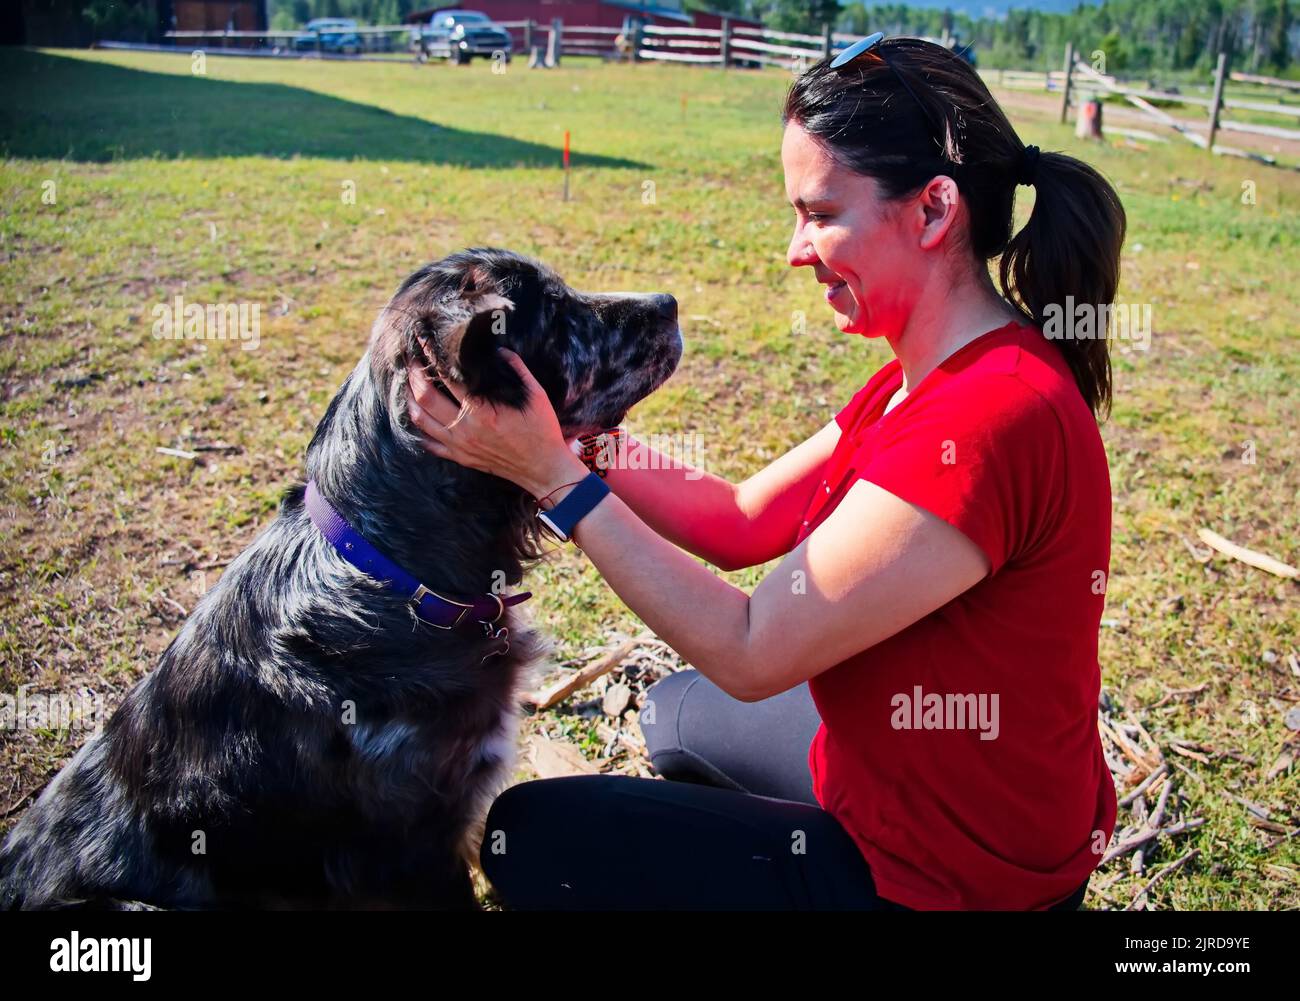 Mature woman giving hug to a cute dog Stock Photo - Alamy